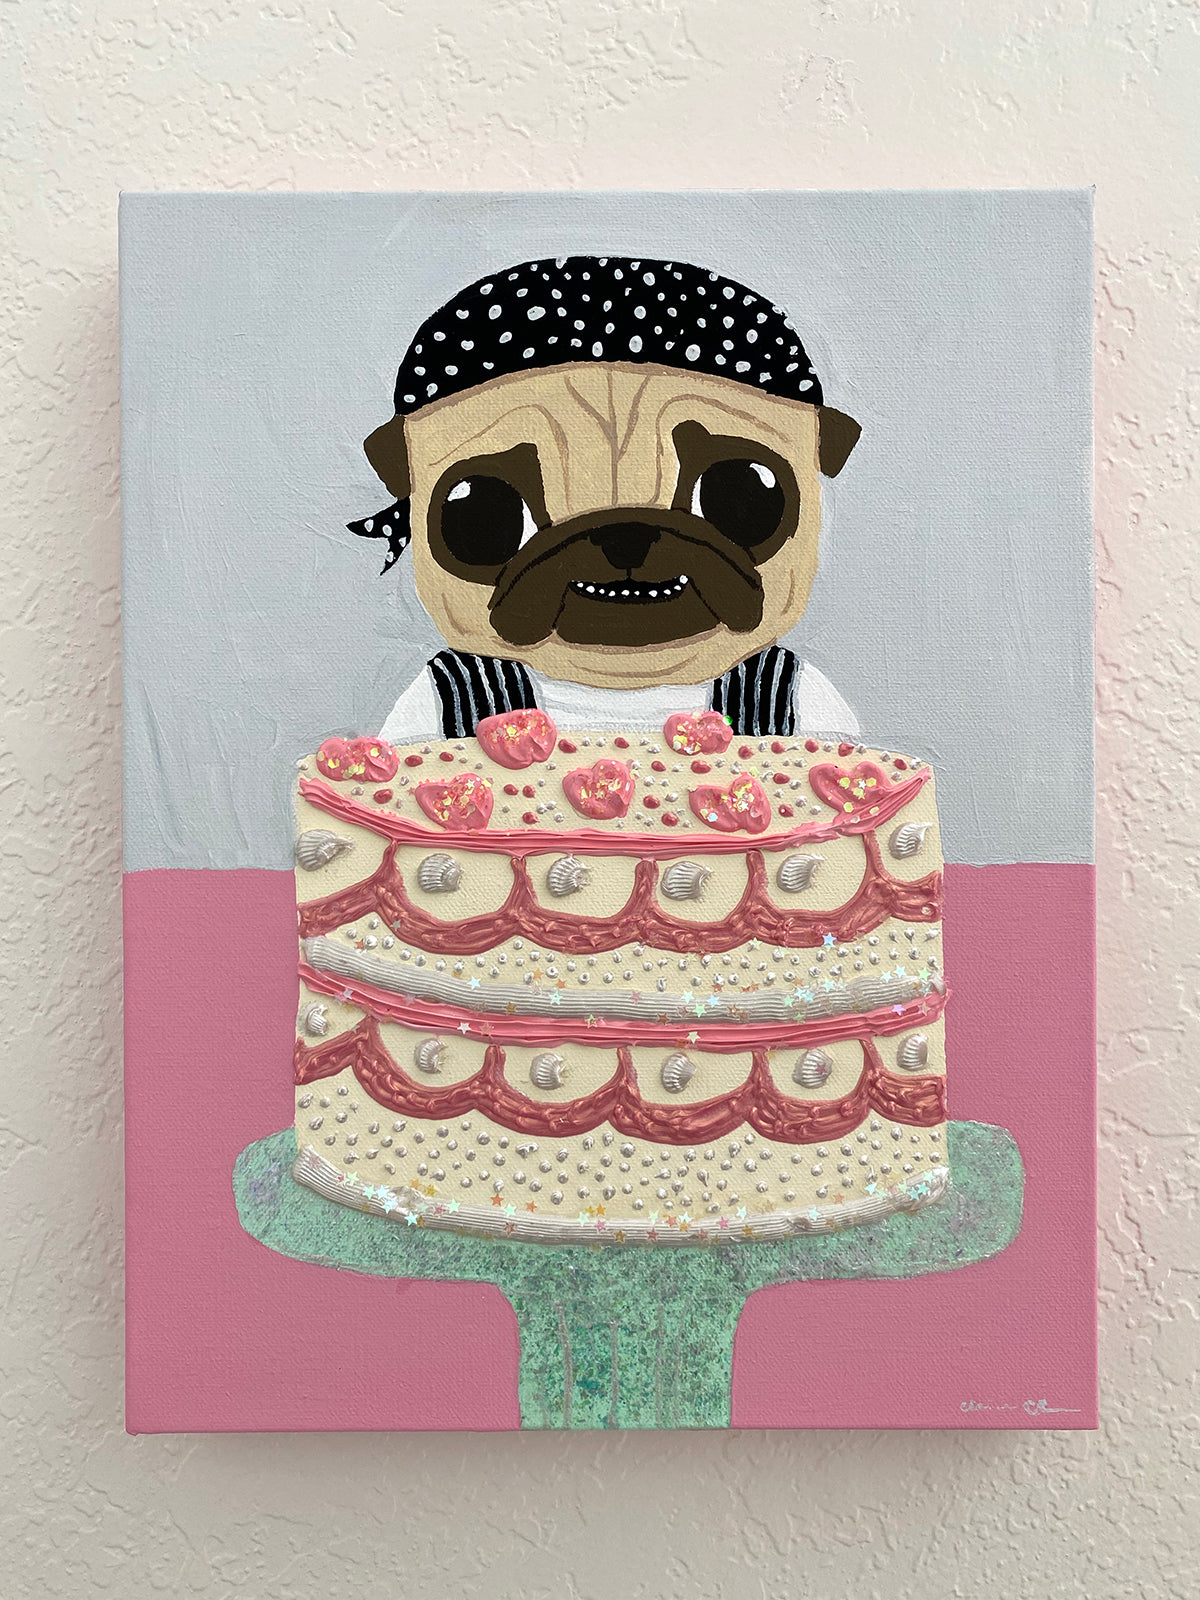 Kevin's Wabi Sabi Cake Decorating Service - Original Pug Painting